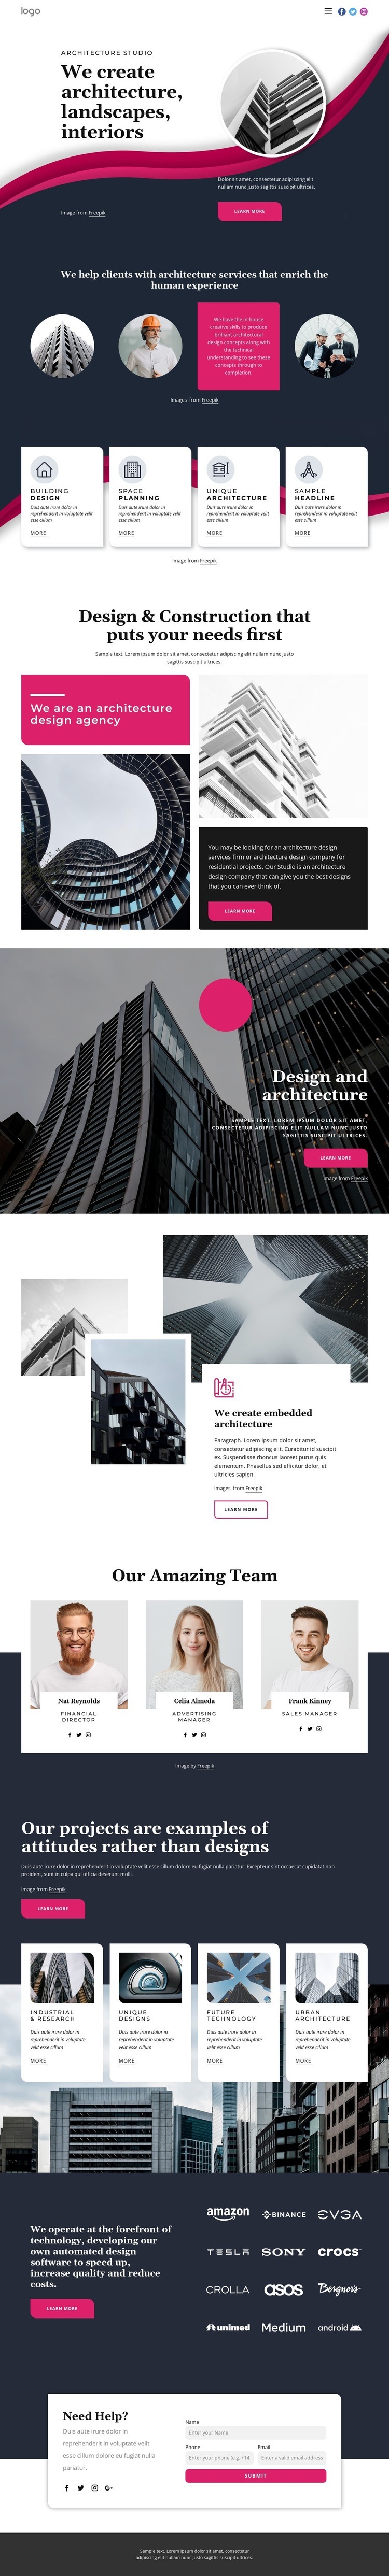 We create great architecture Elementor Template Alternative